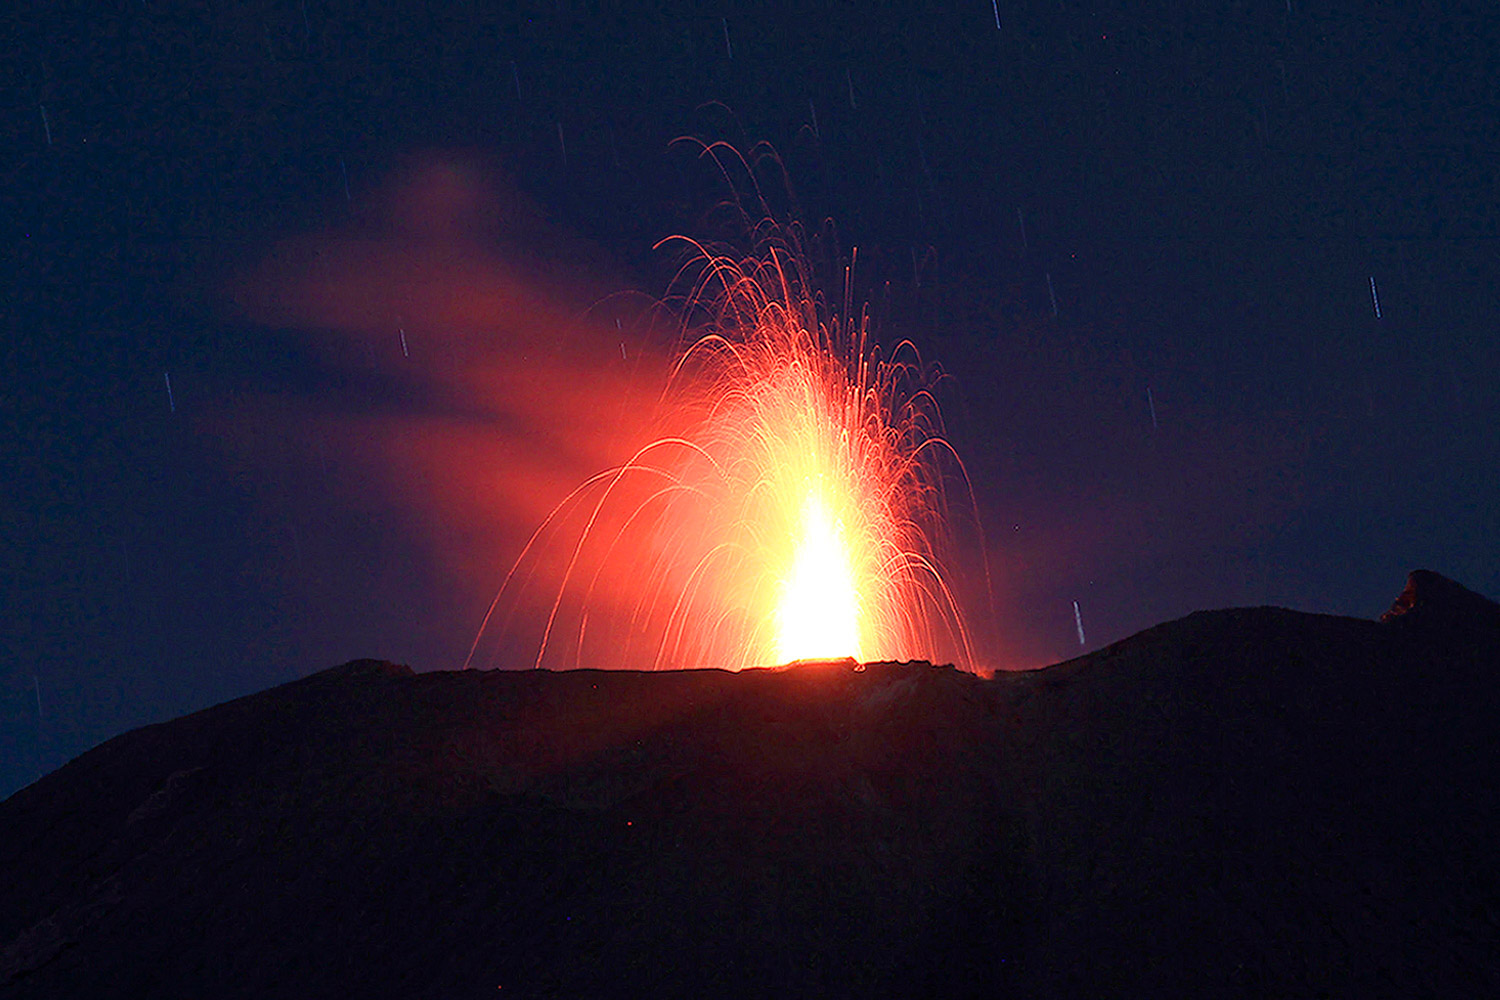 El volcán Slamet en erupción